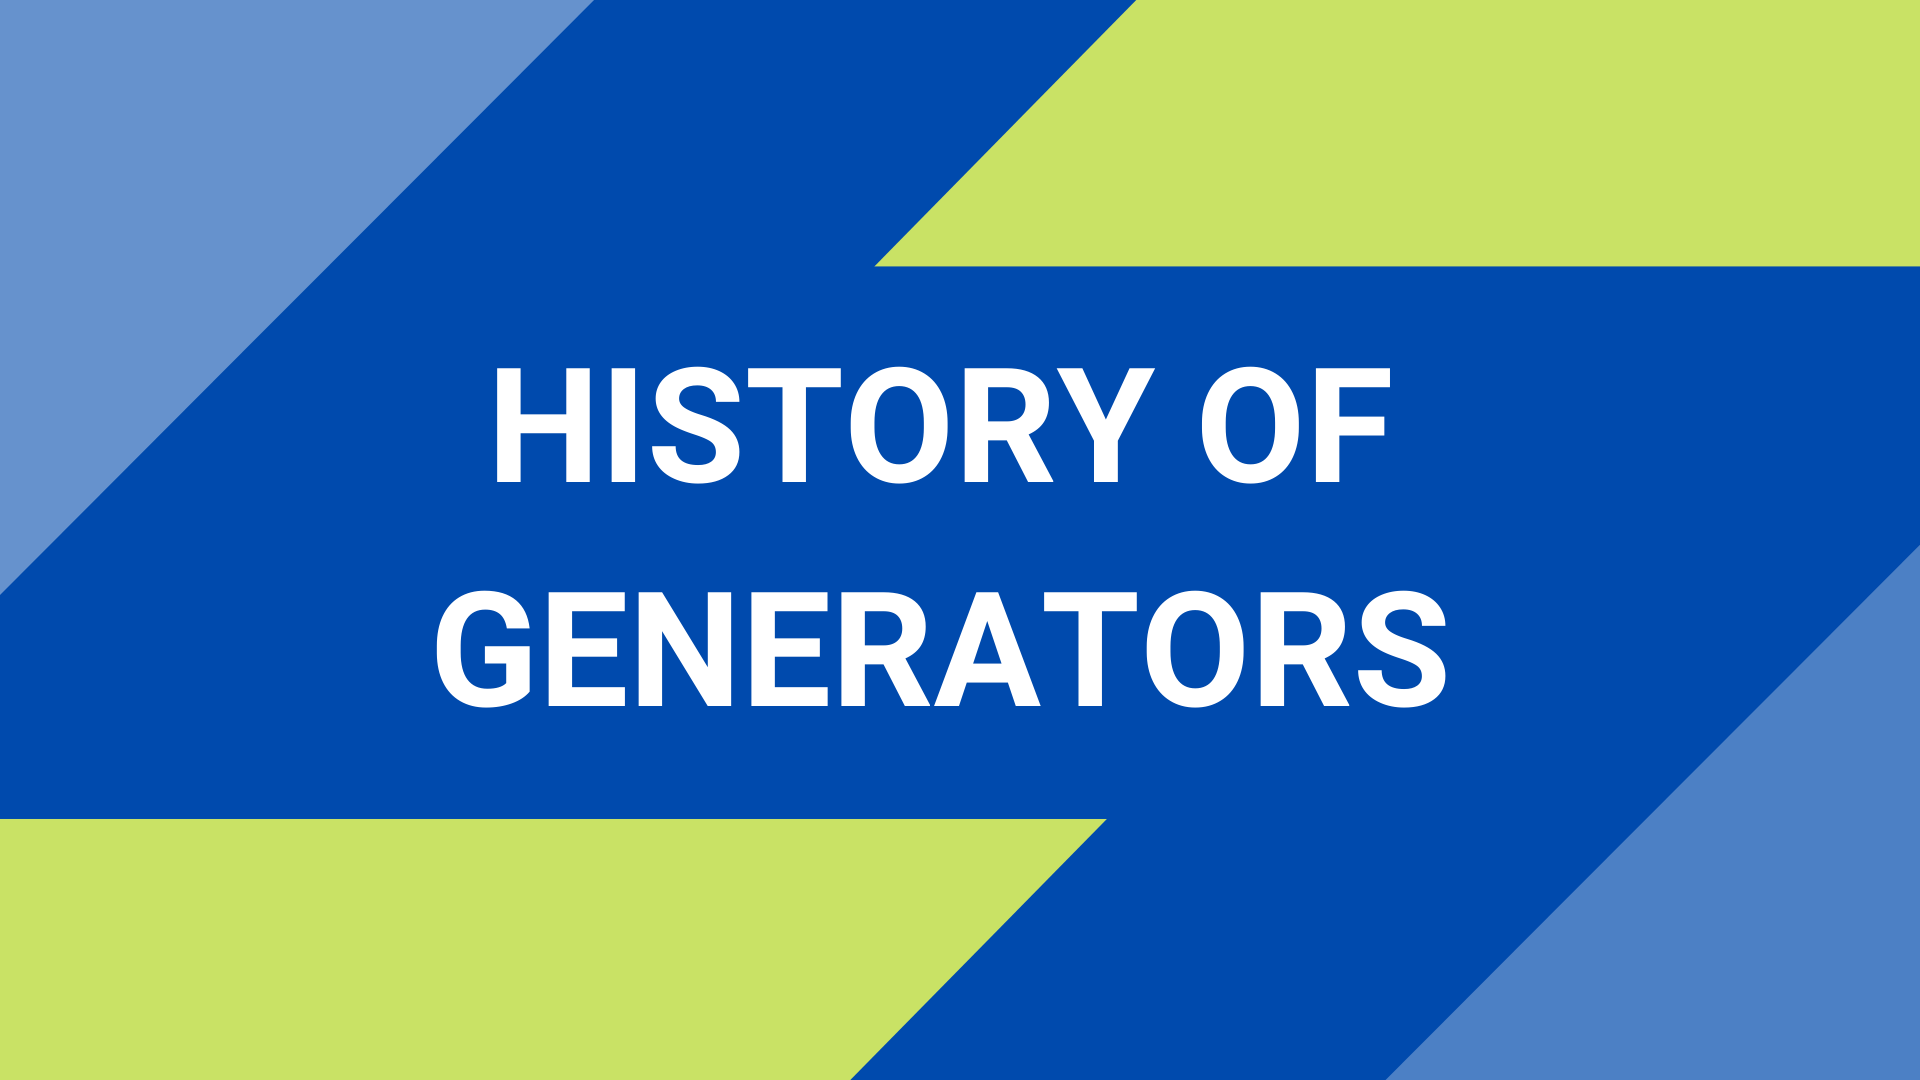 HISTORY OF GENERATORS